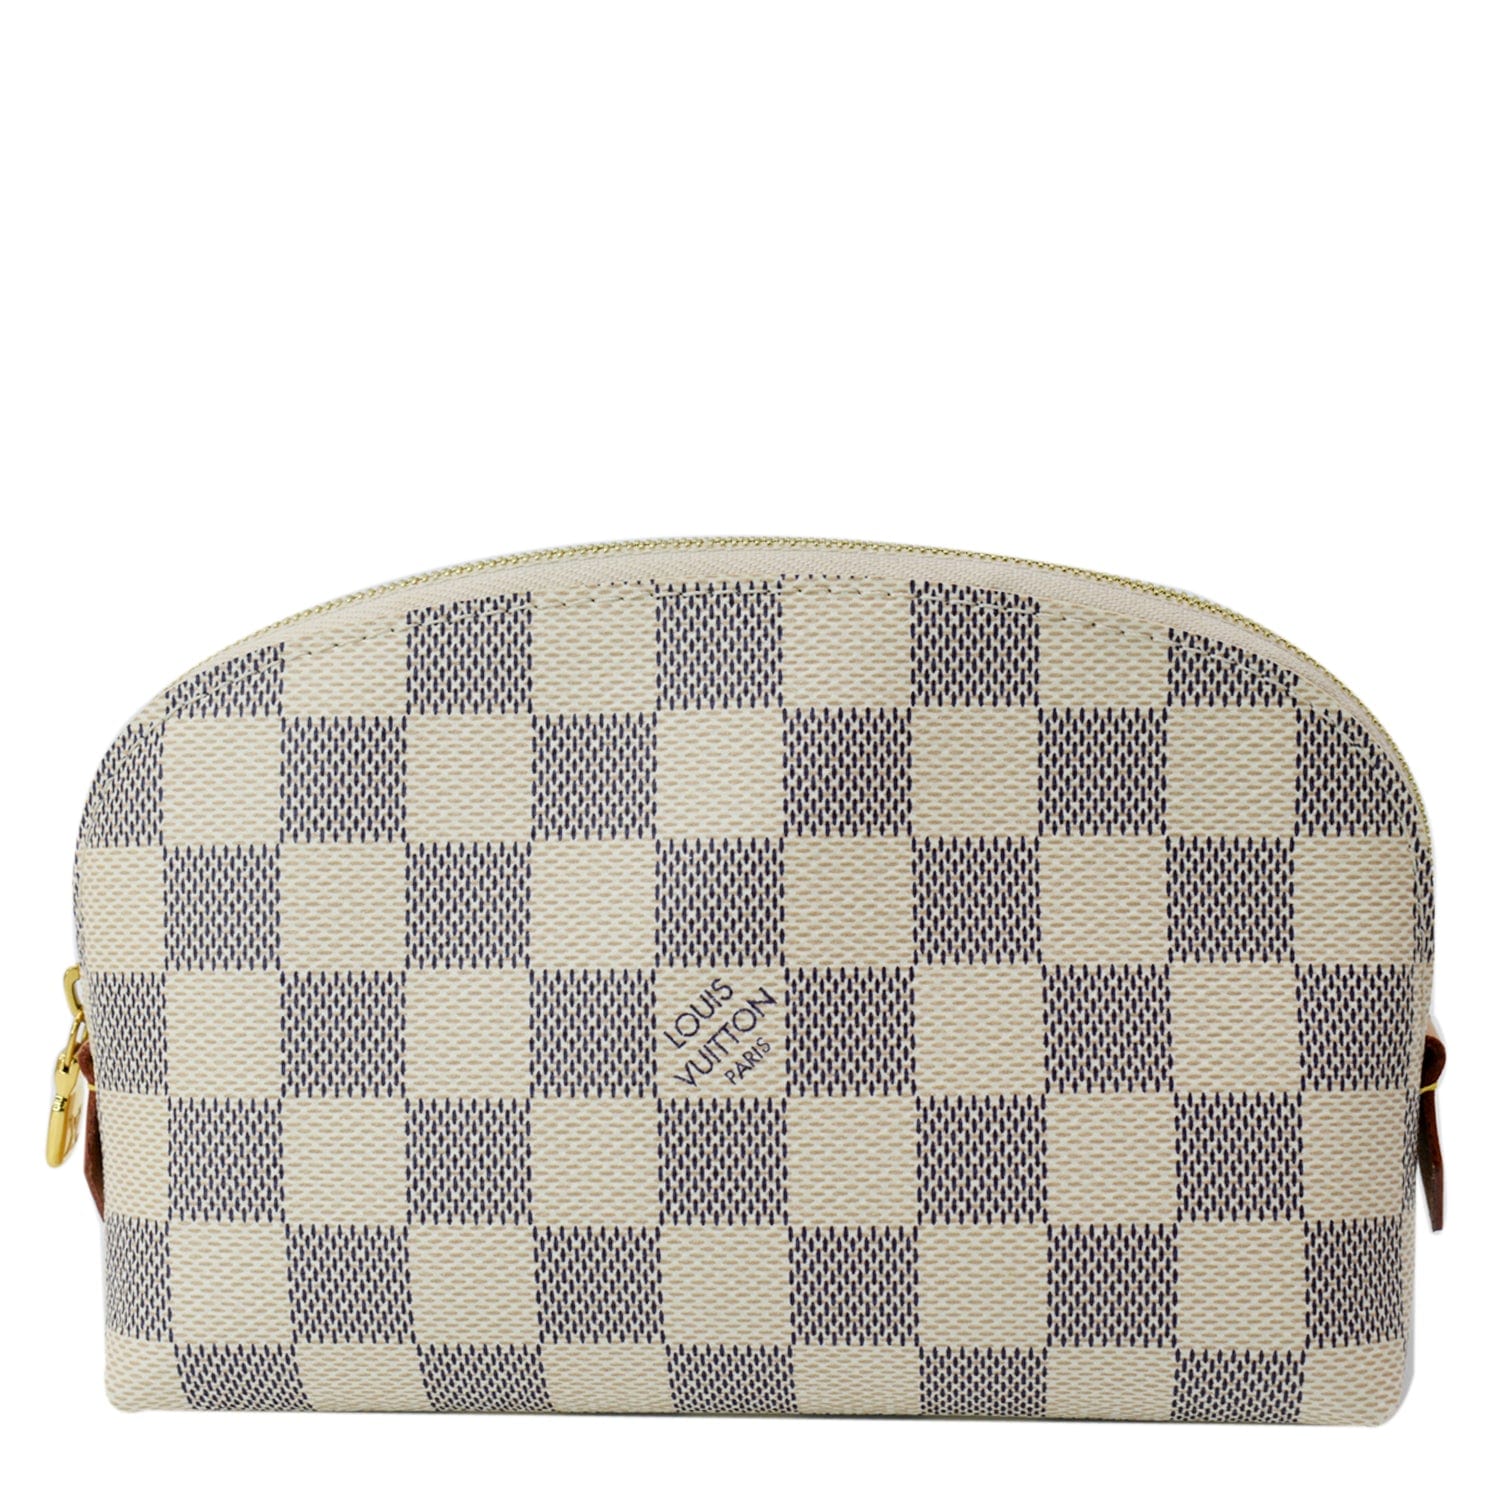 Louis Vuitton Cosmetic pouch (M80502)